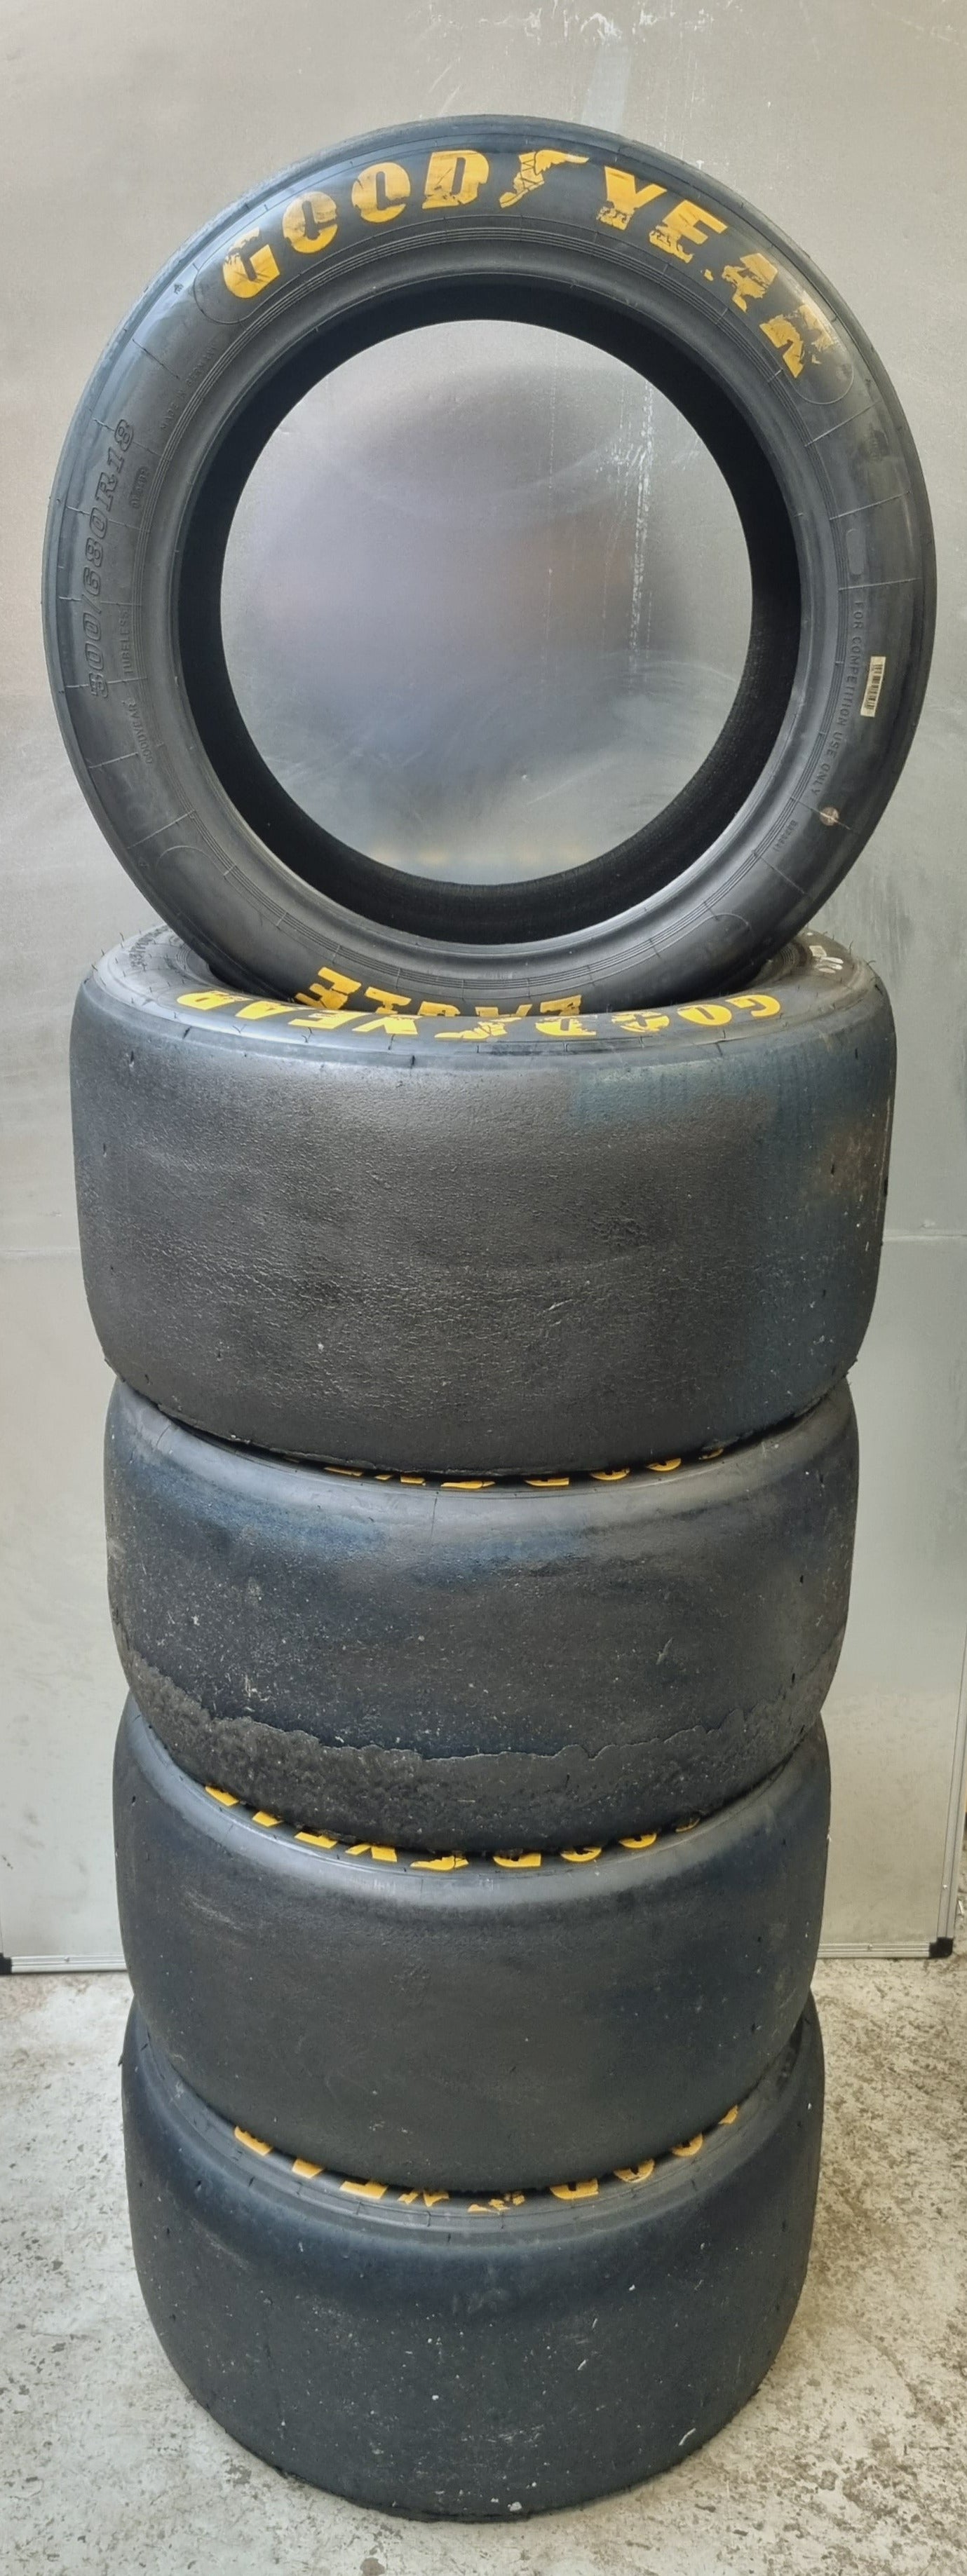 Goodyear (Dunlop) 310/710/18 Slick Racing Tyres